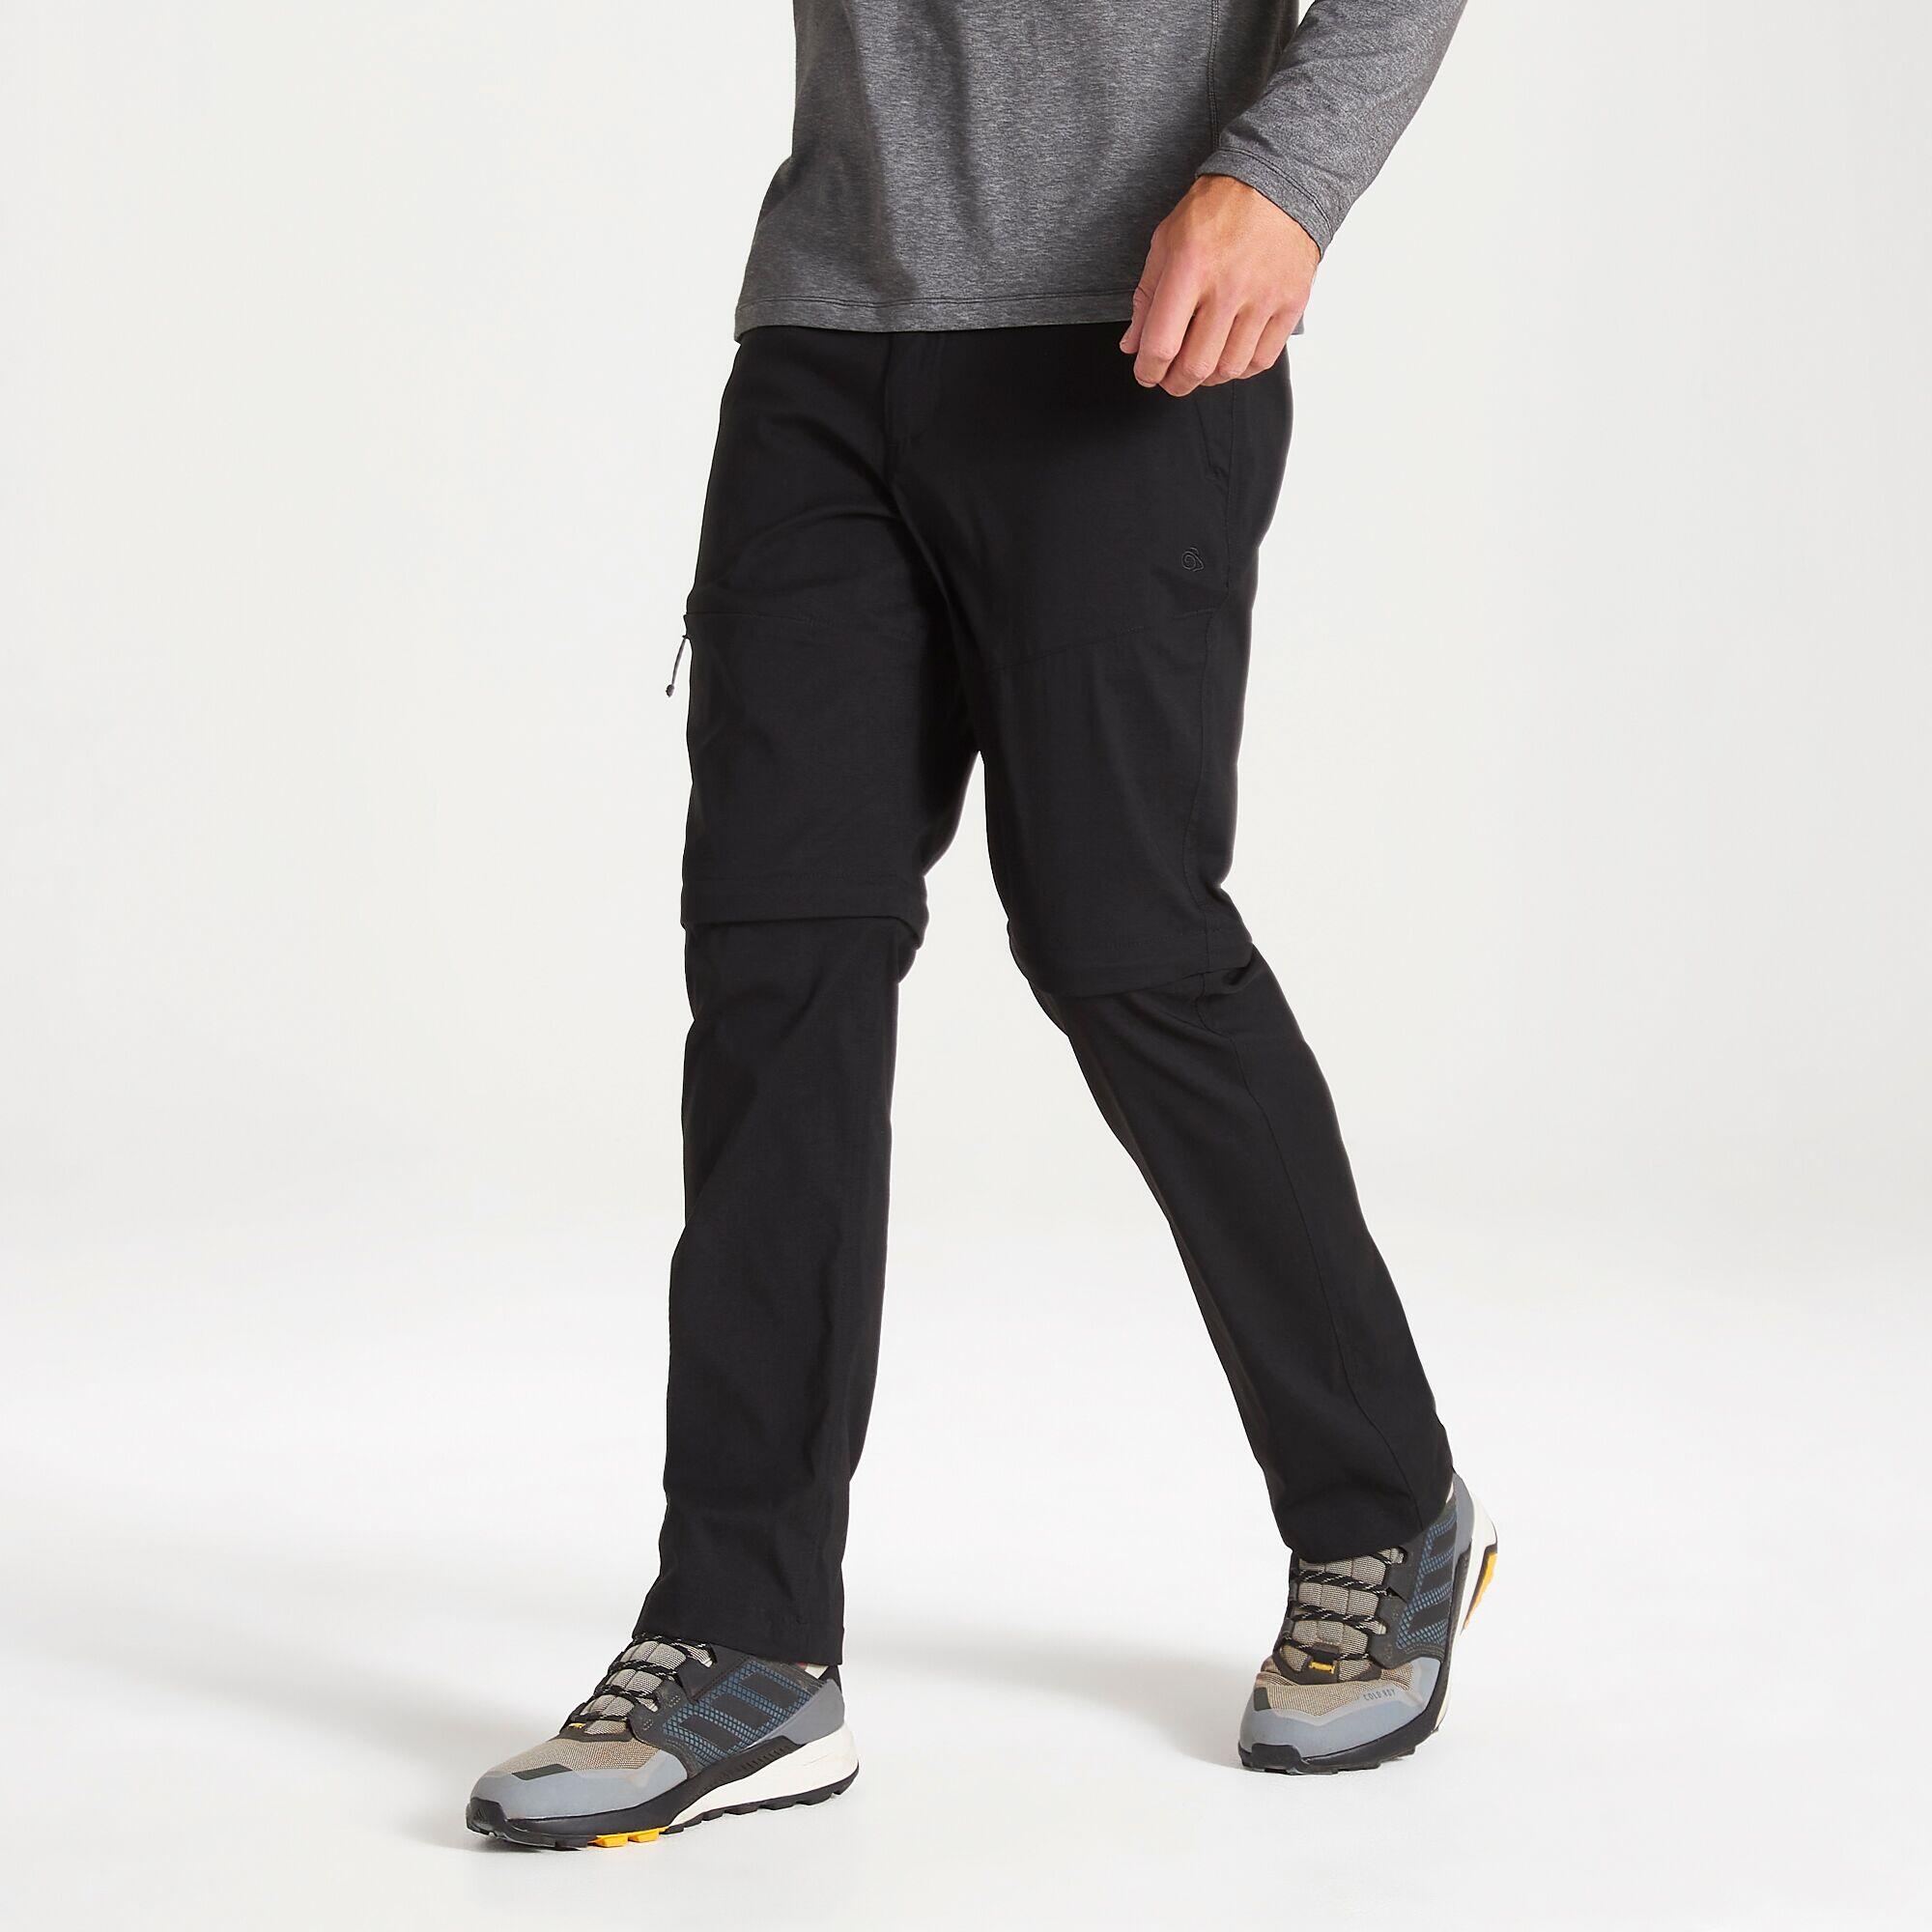 Men's Kiwi Pro II Convertible Trousers 4/5